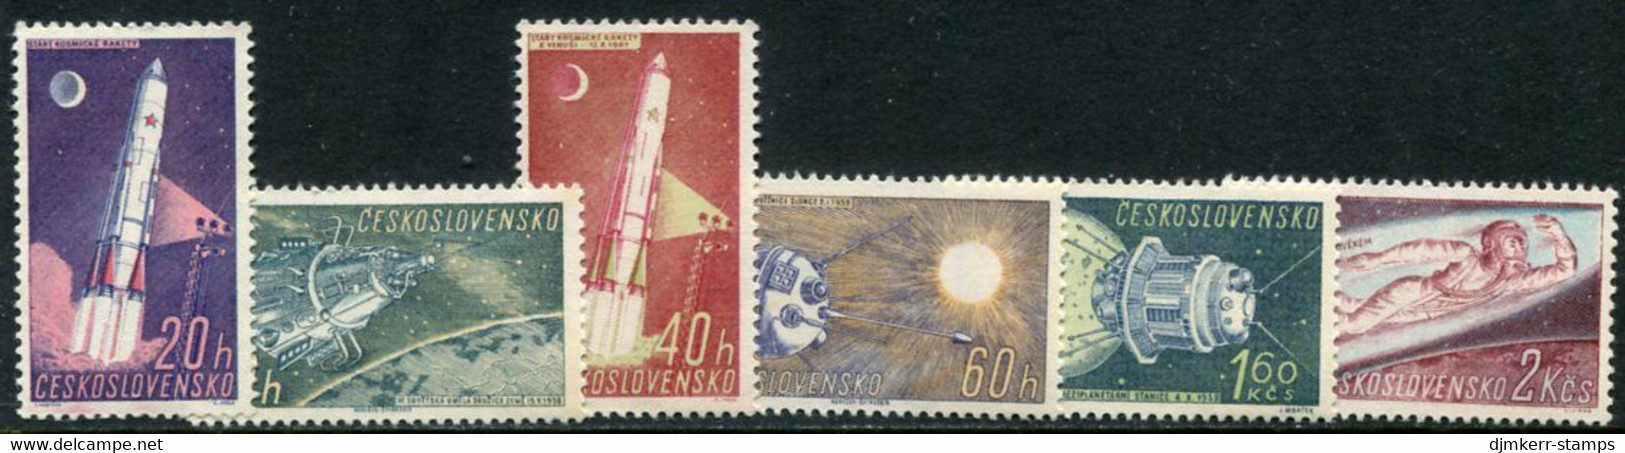 CZECHOSLOVAKIA 1961 Space Exploration MNH / **.  Michel 1252-57 - Unused Stamps